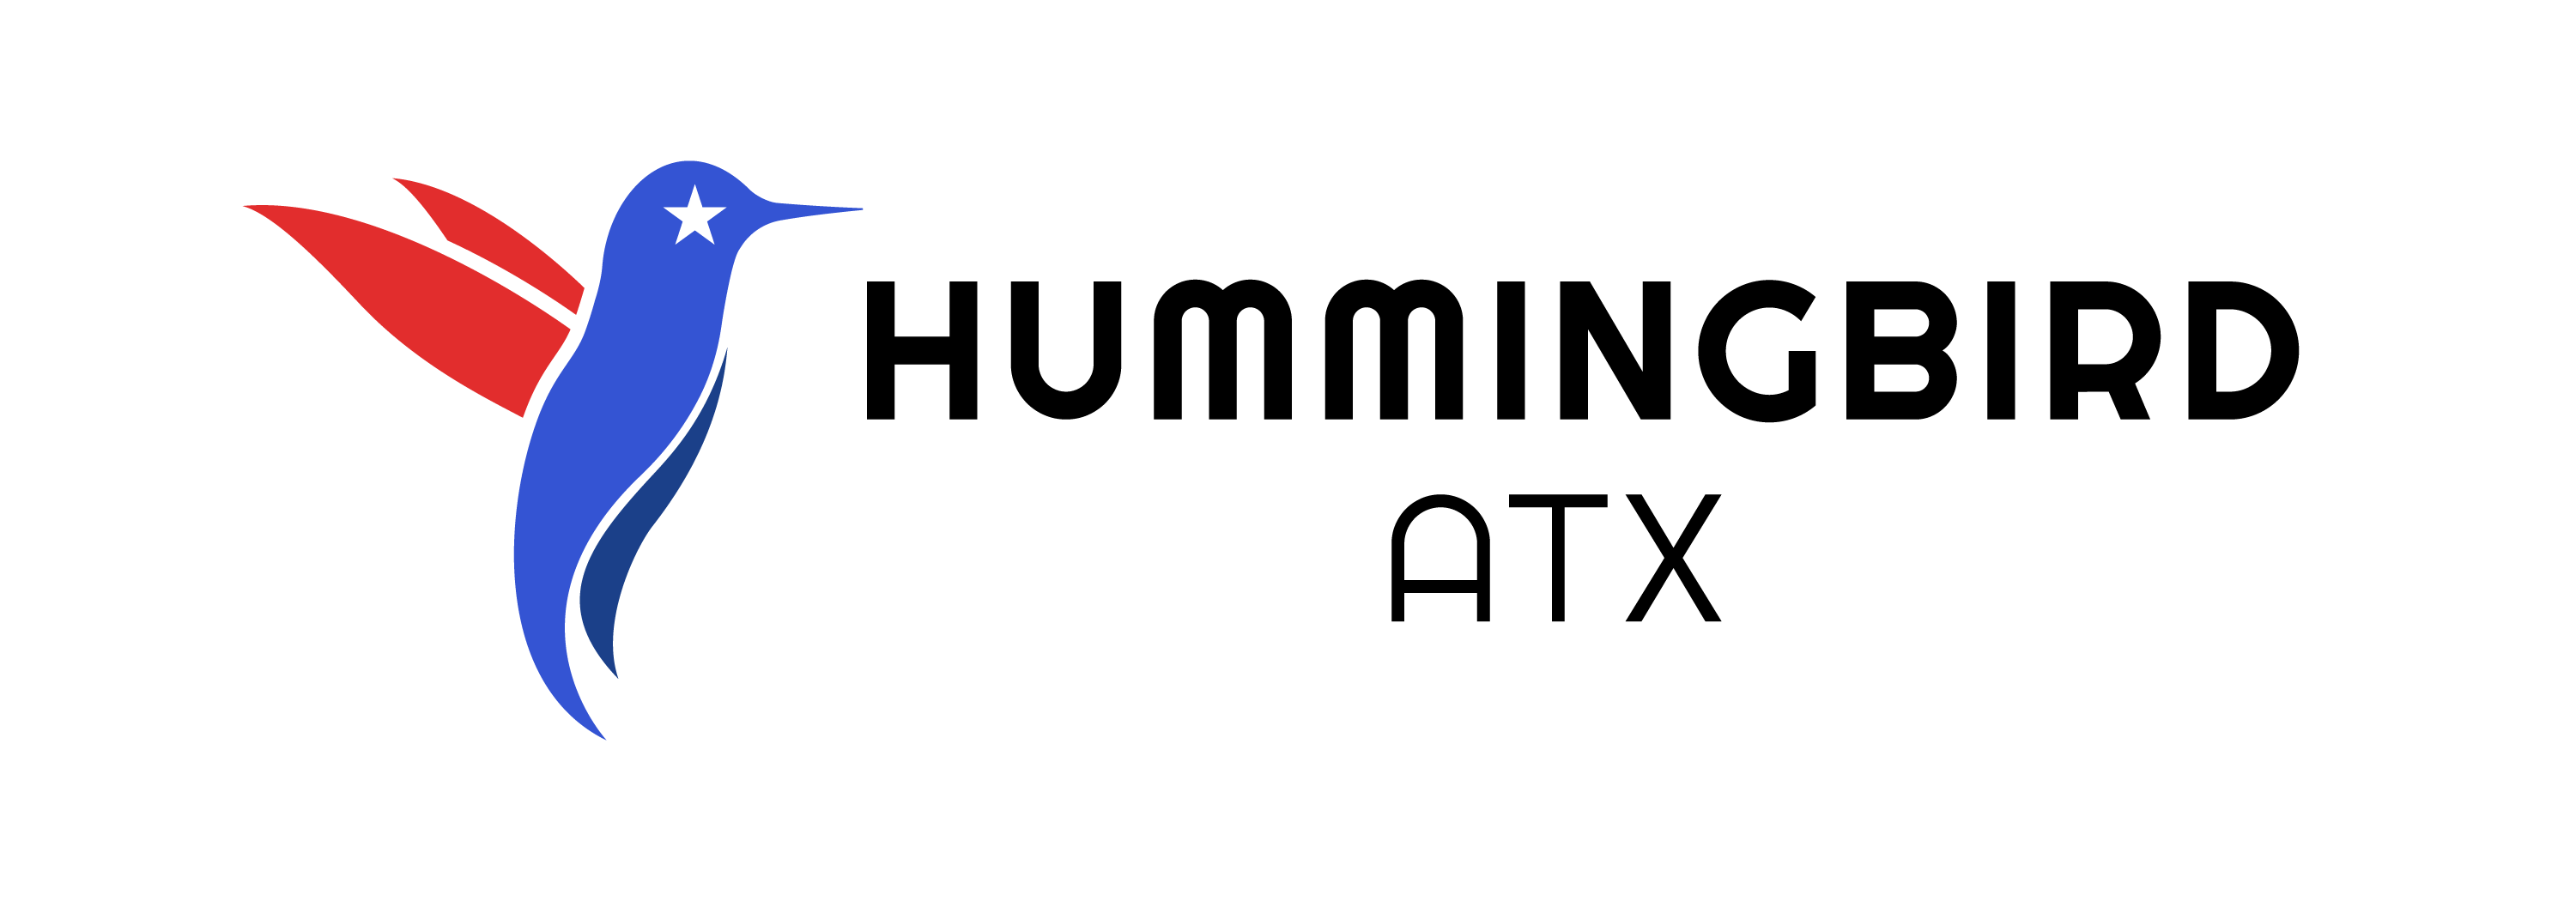 HummingbirdATX logo by Mason Barrera